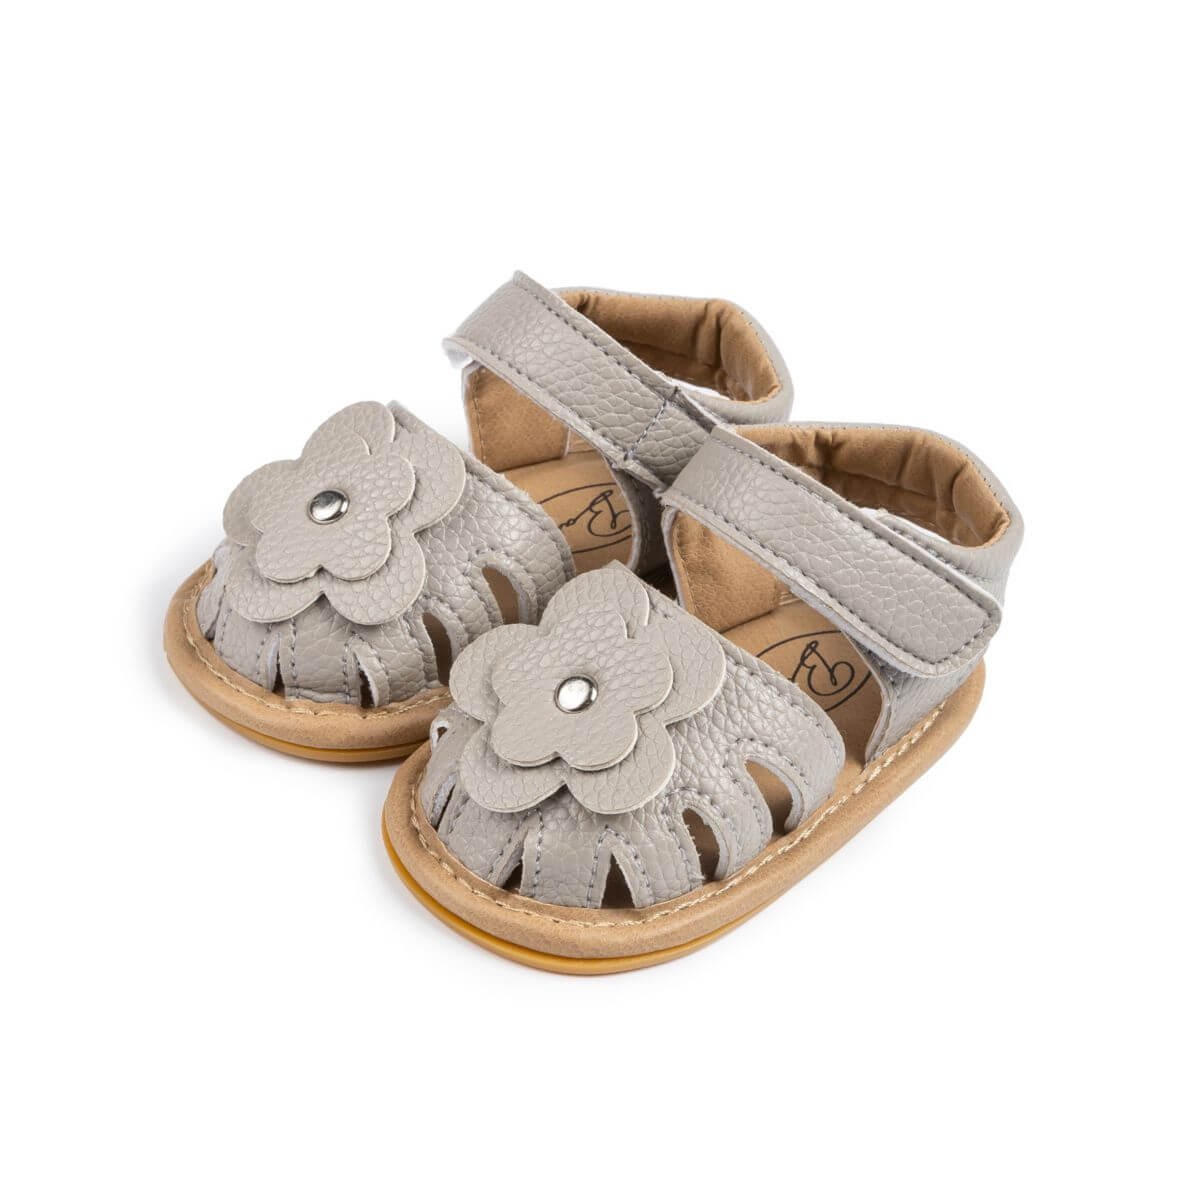 Anara Soft Sole Sandals - Grey